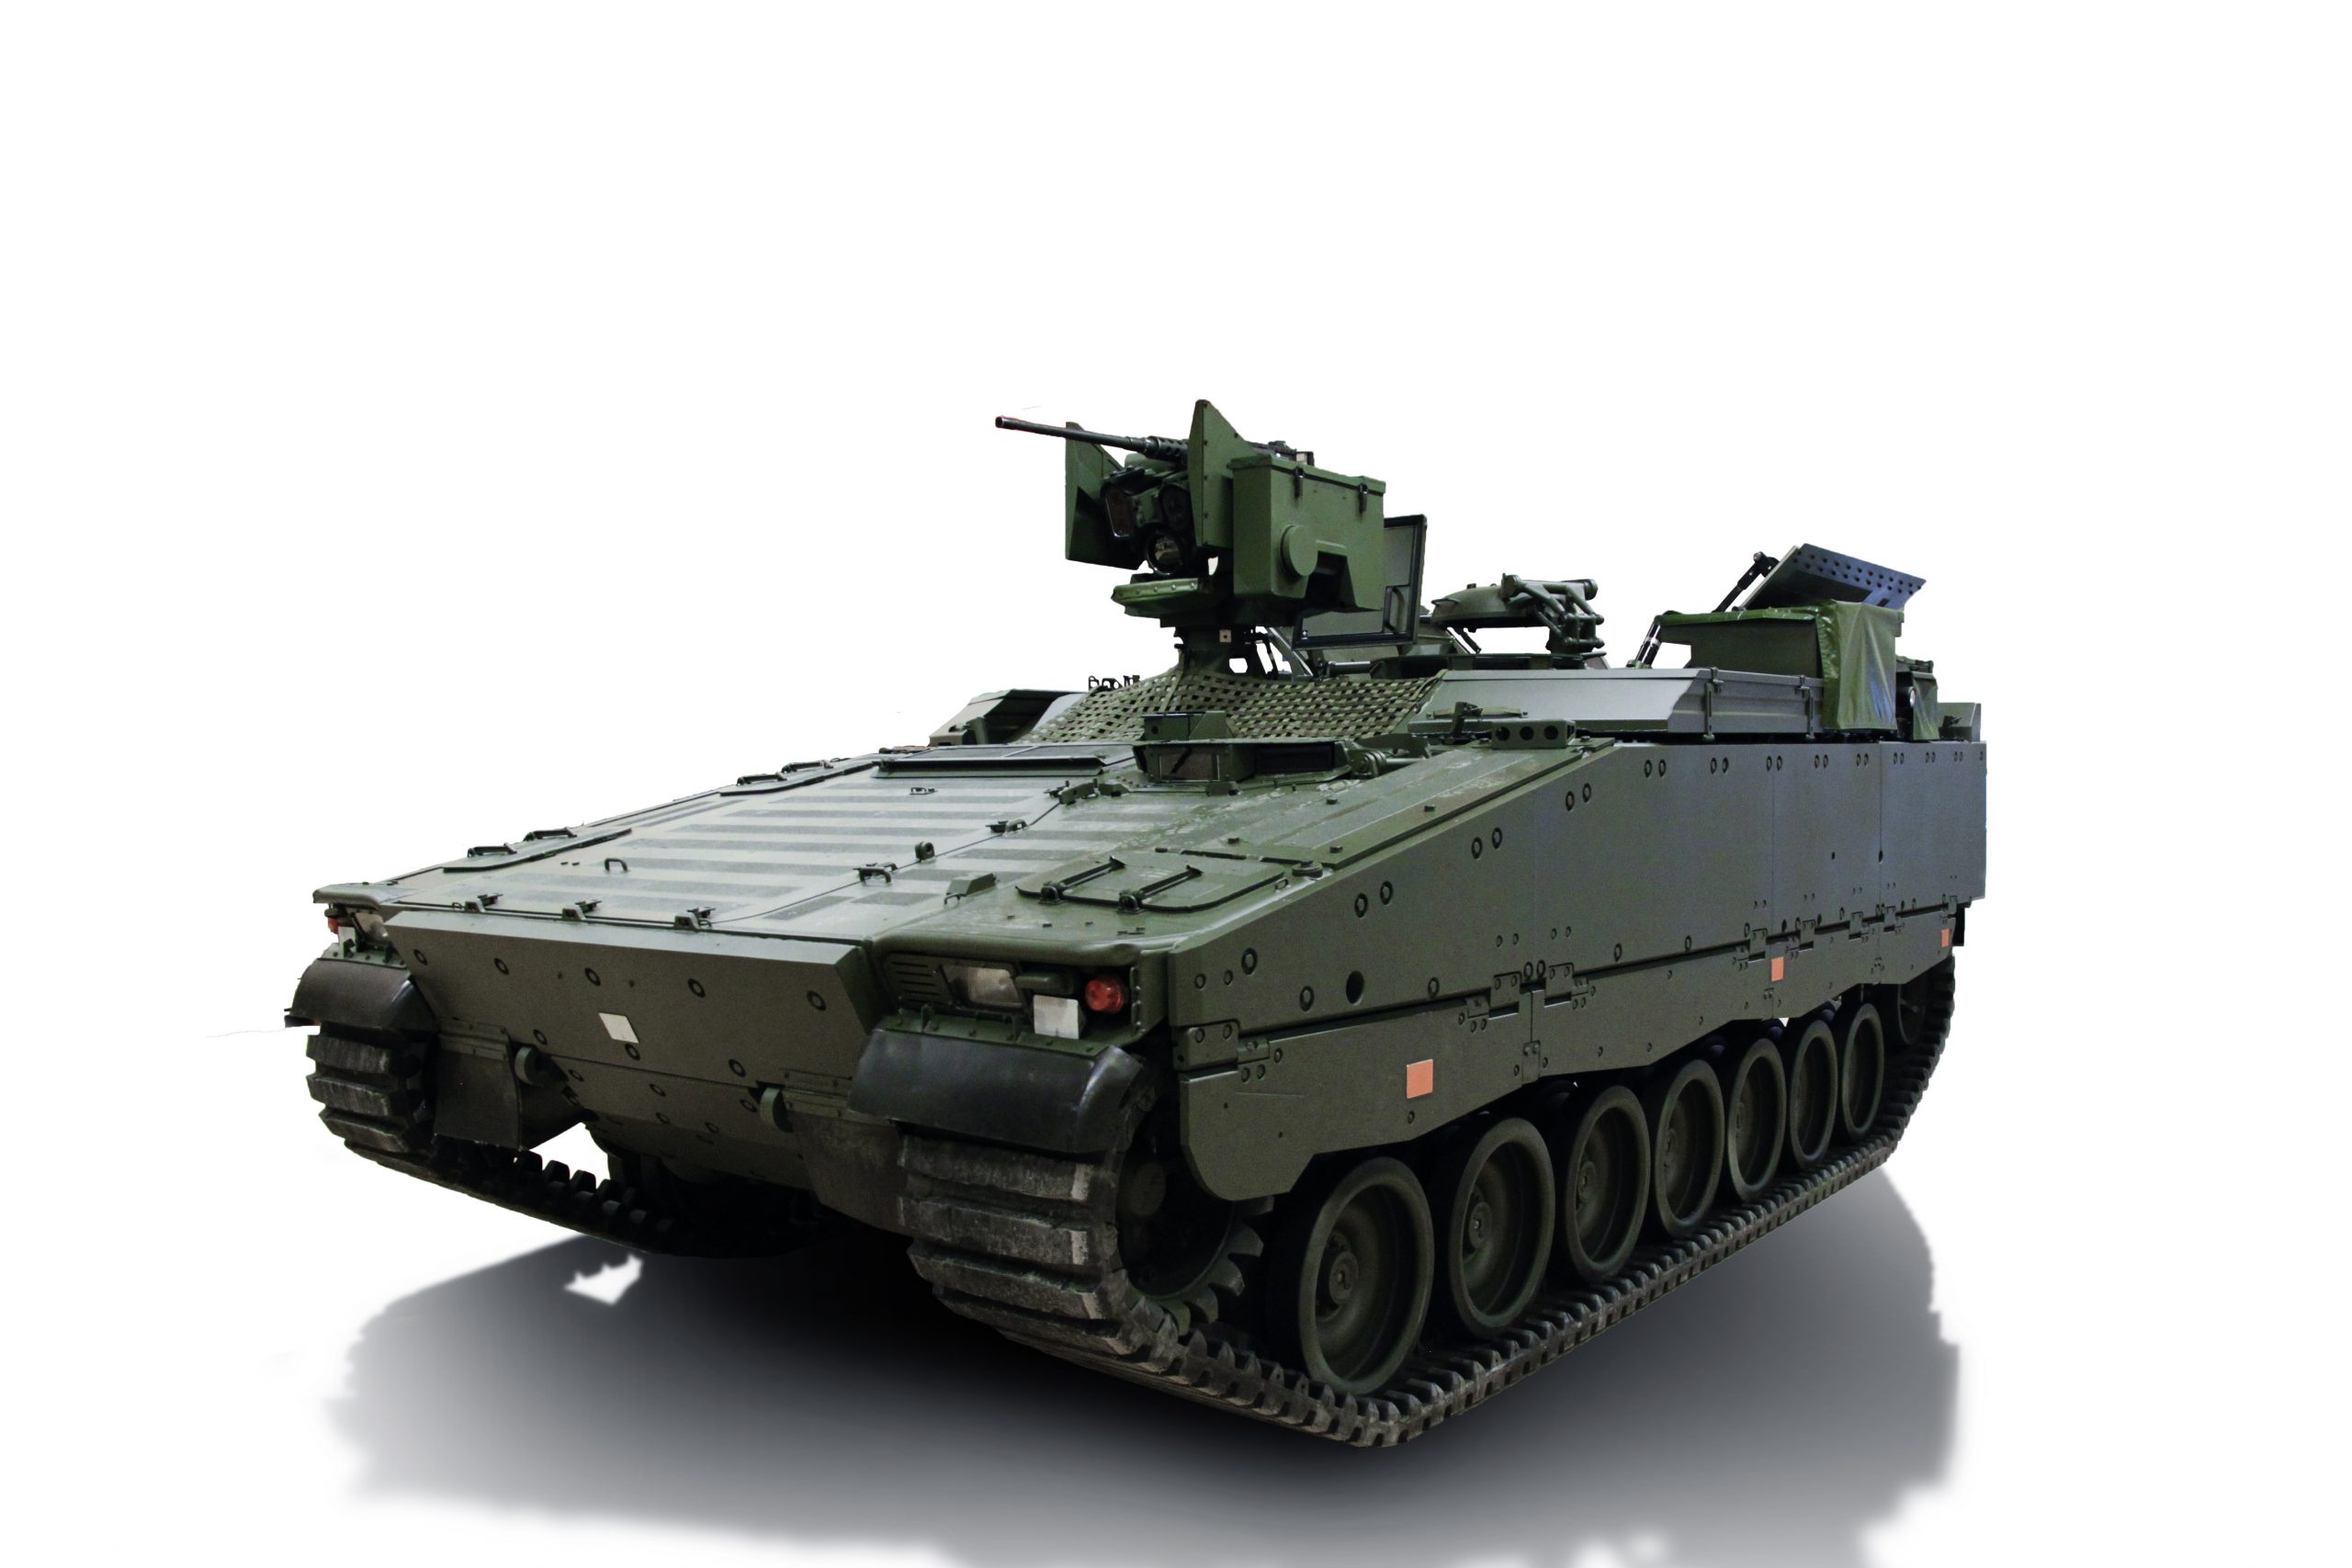 BAE CV90 combat support vehicle